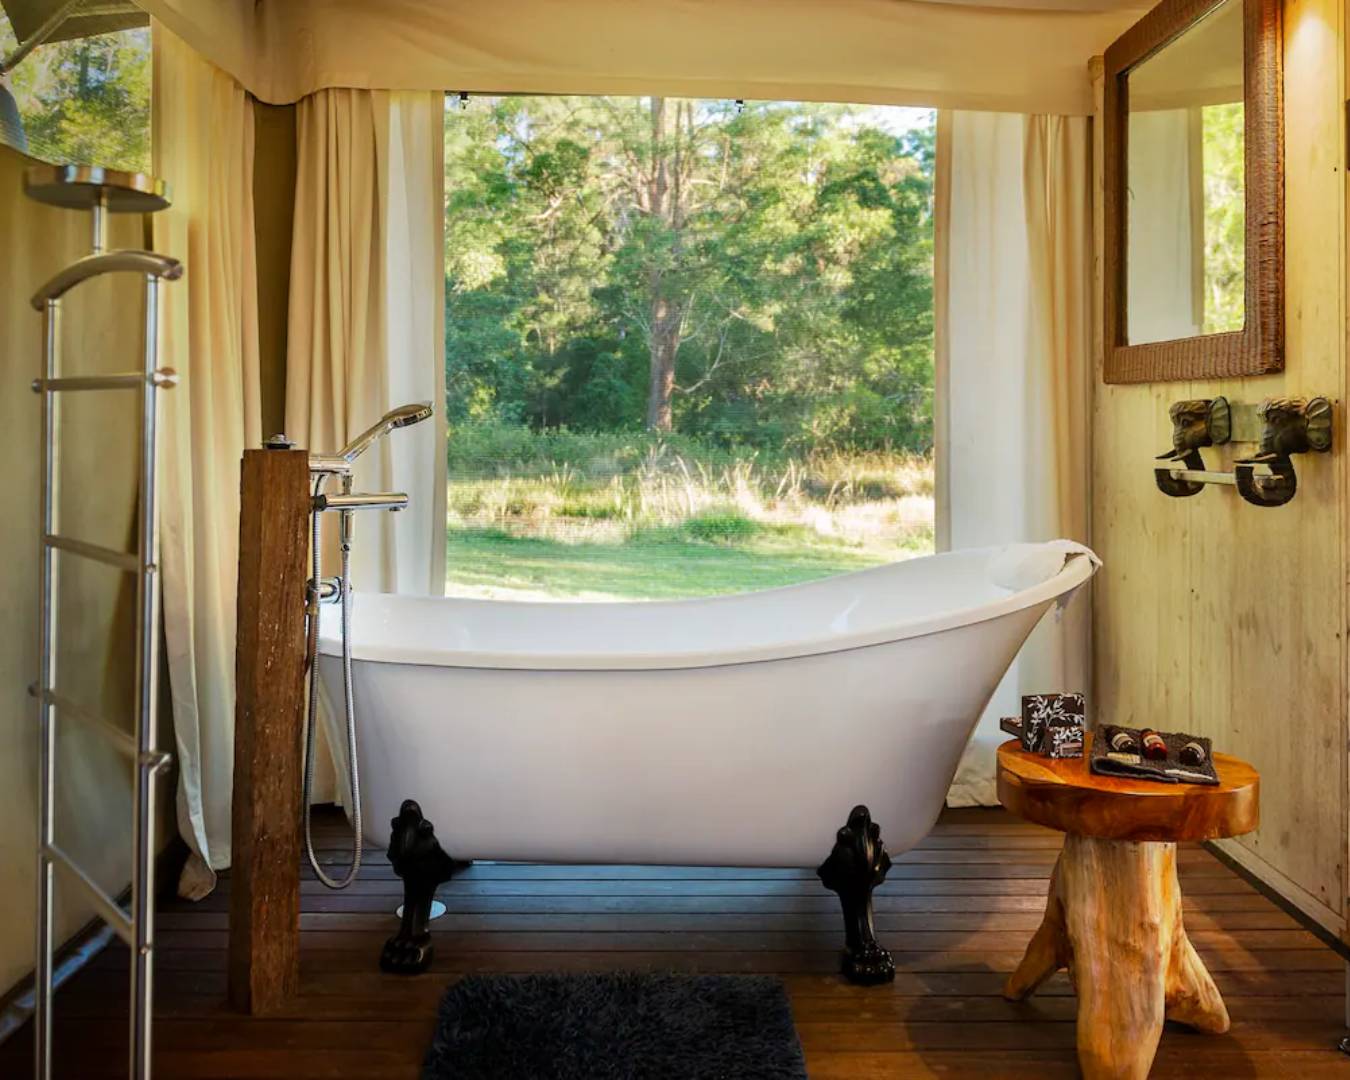 Indoor bathtub overlooking grassy area outside through window